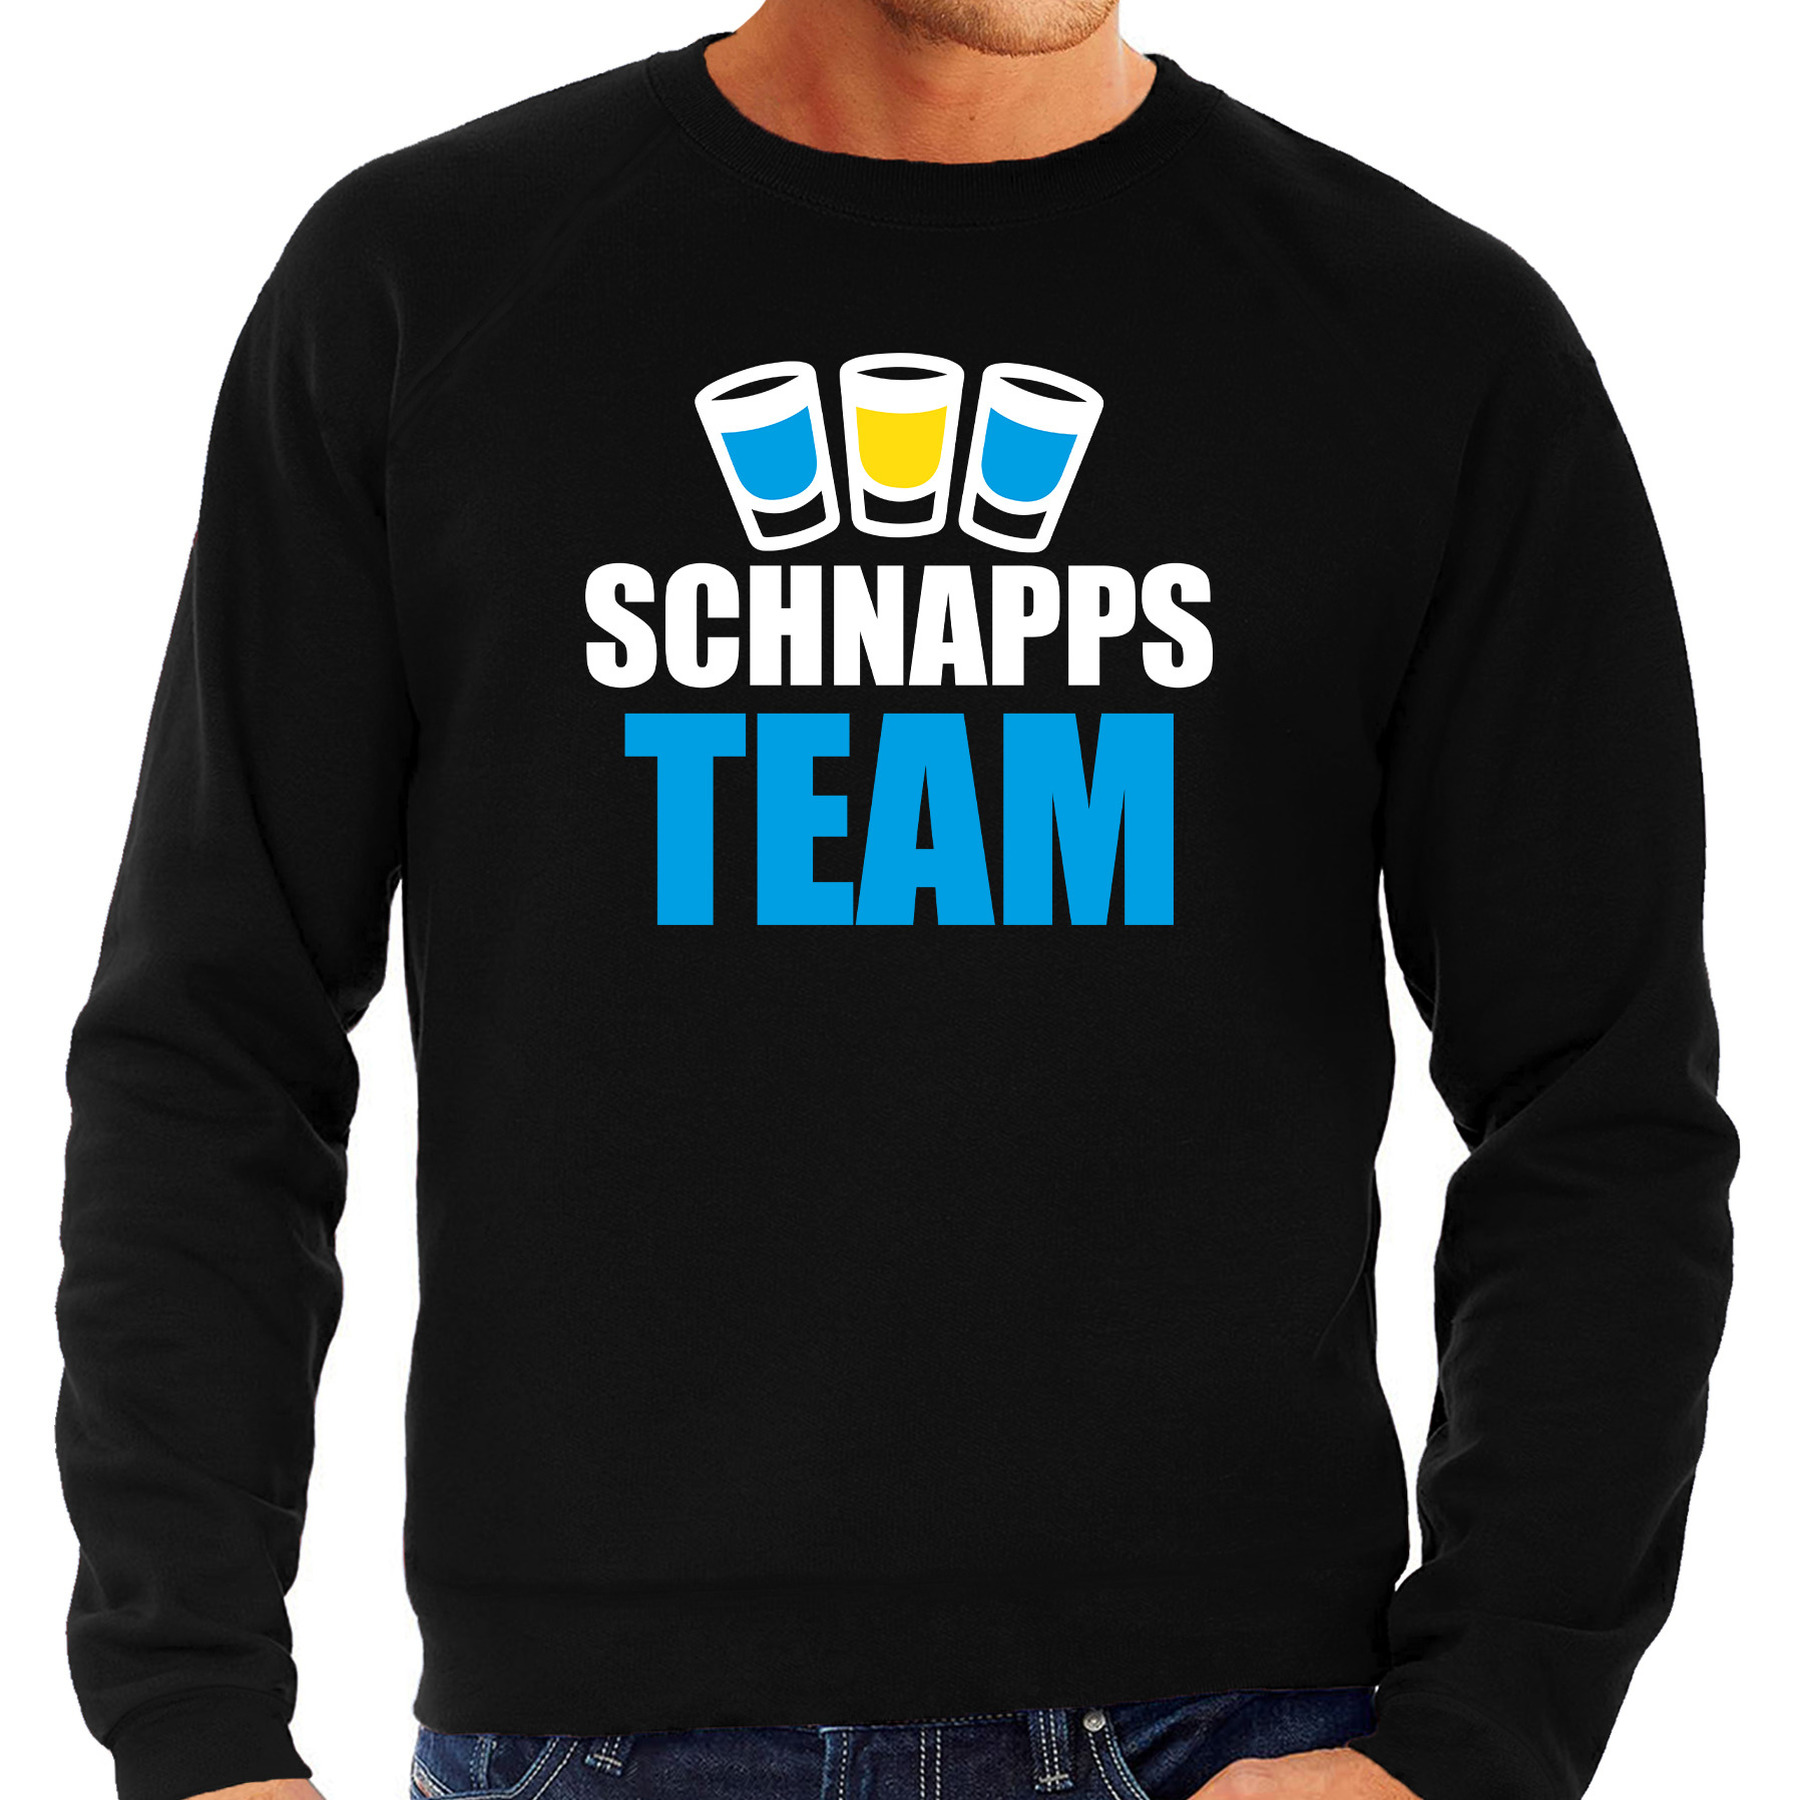 Apres ski trui Schnapps team zwart heren Wintersport sweater Foute apres ski outfit